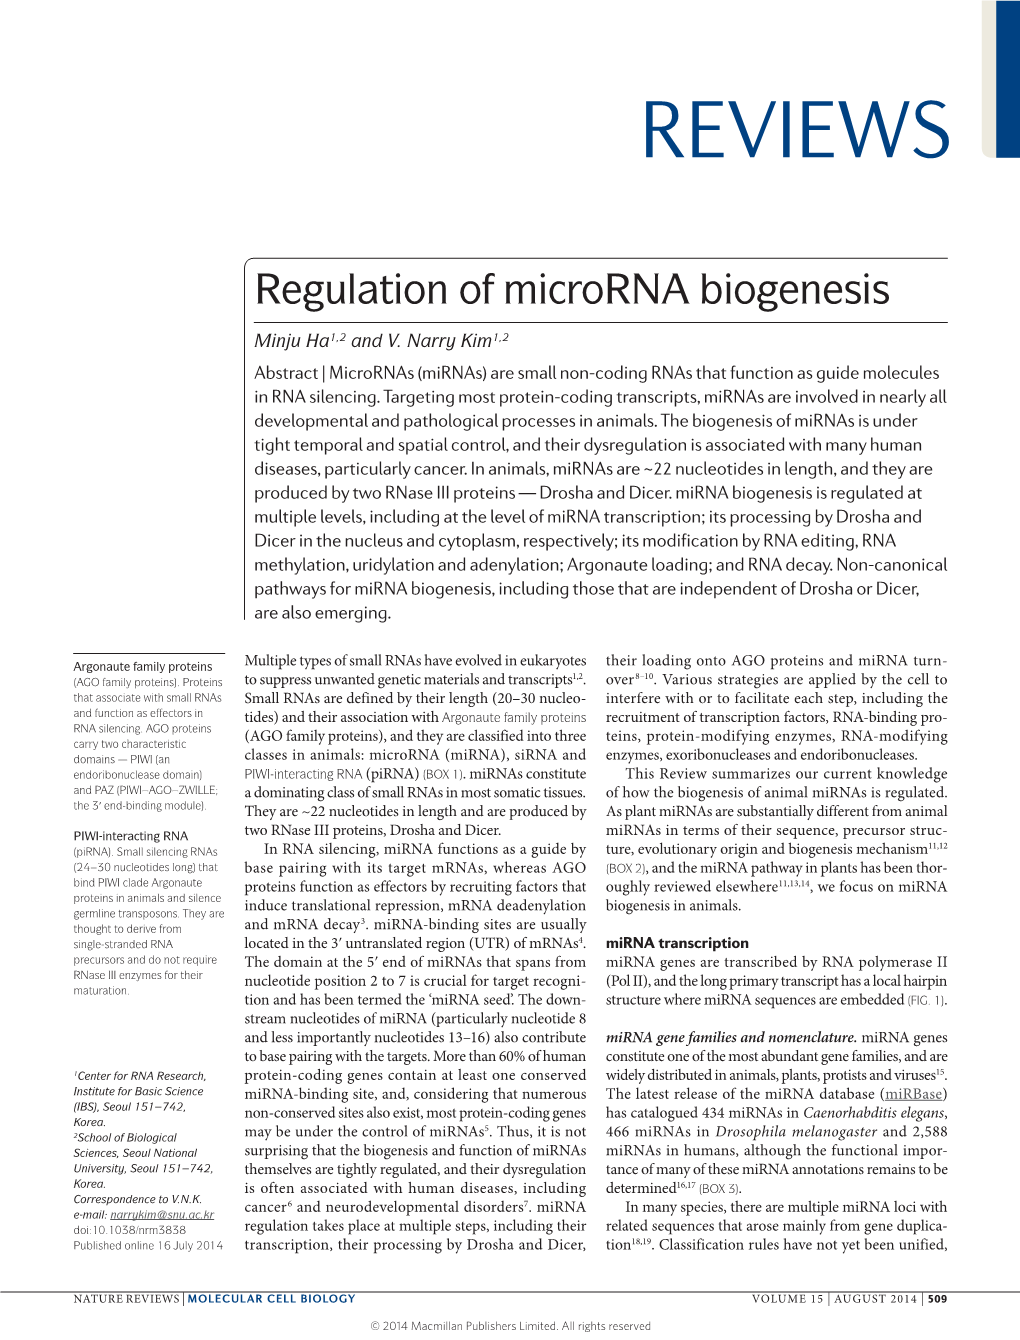 Regulation of Microrna Biogenesis